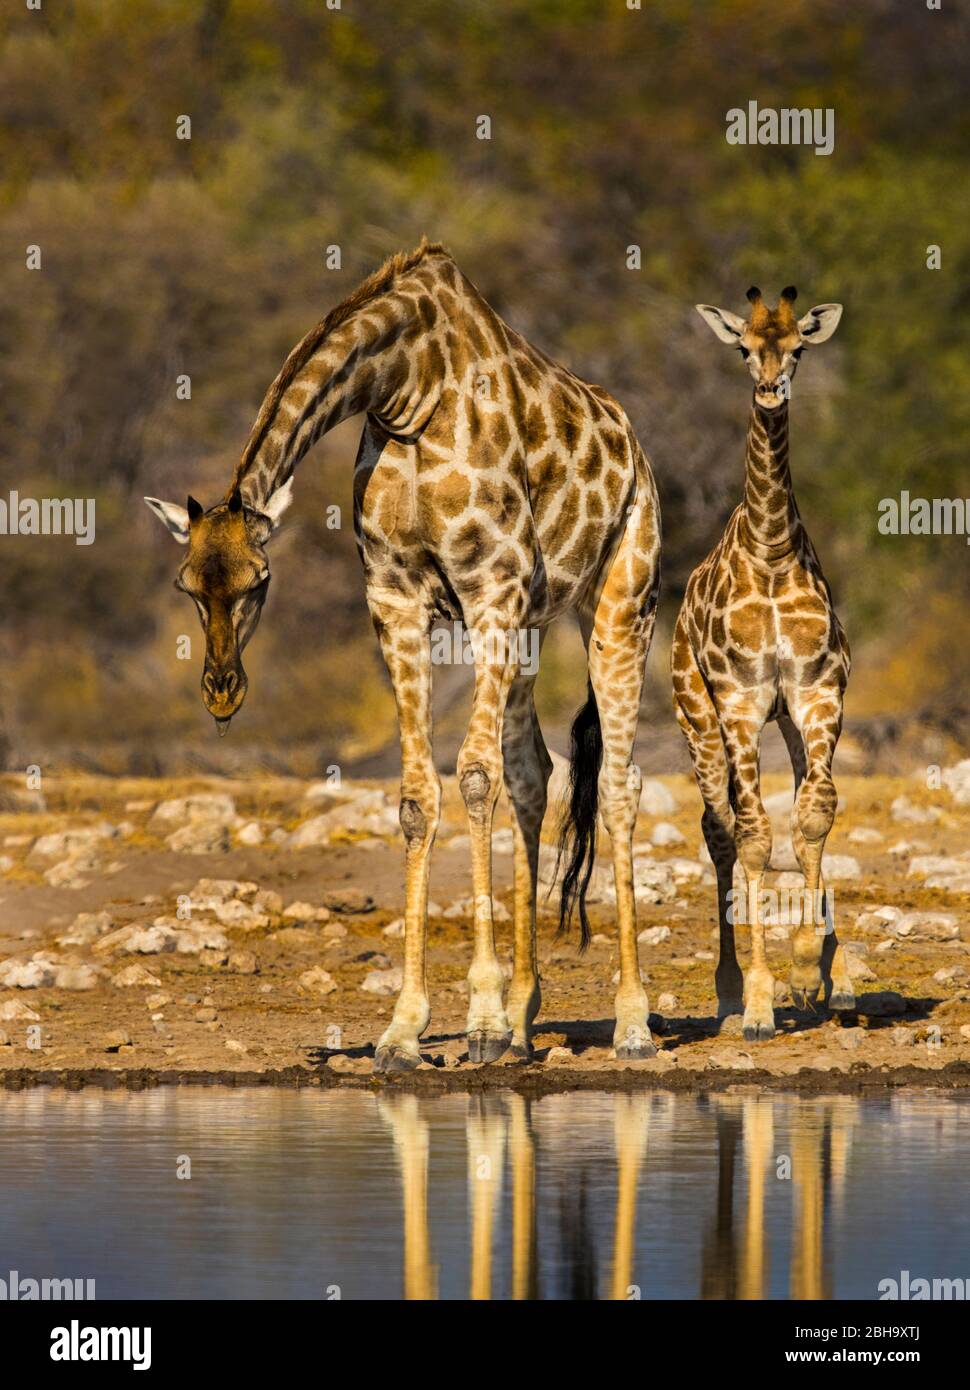 Vista de dos jirafas del sur (Giraffa giraffa) cerca de un lugar de riego, el Parque Nacional Etosha, Namibia, África Foto de stock